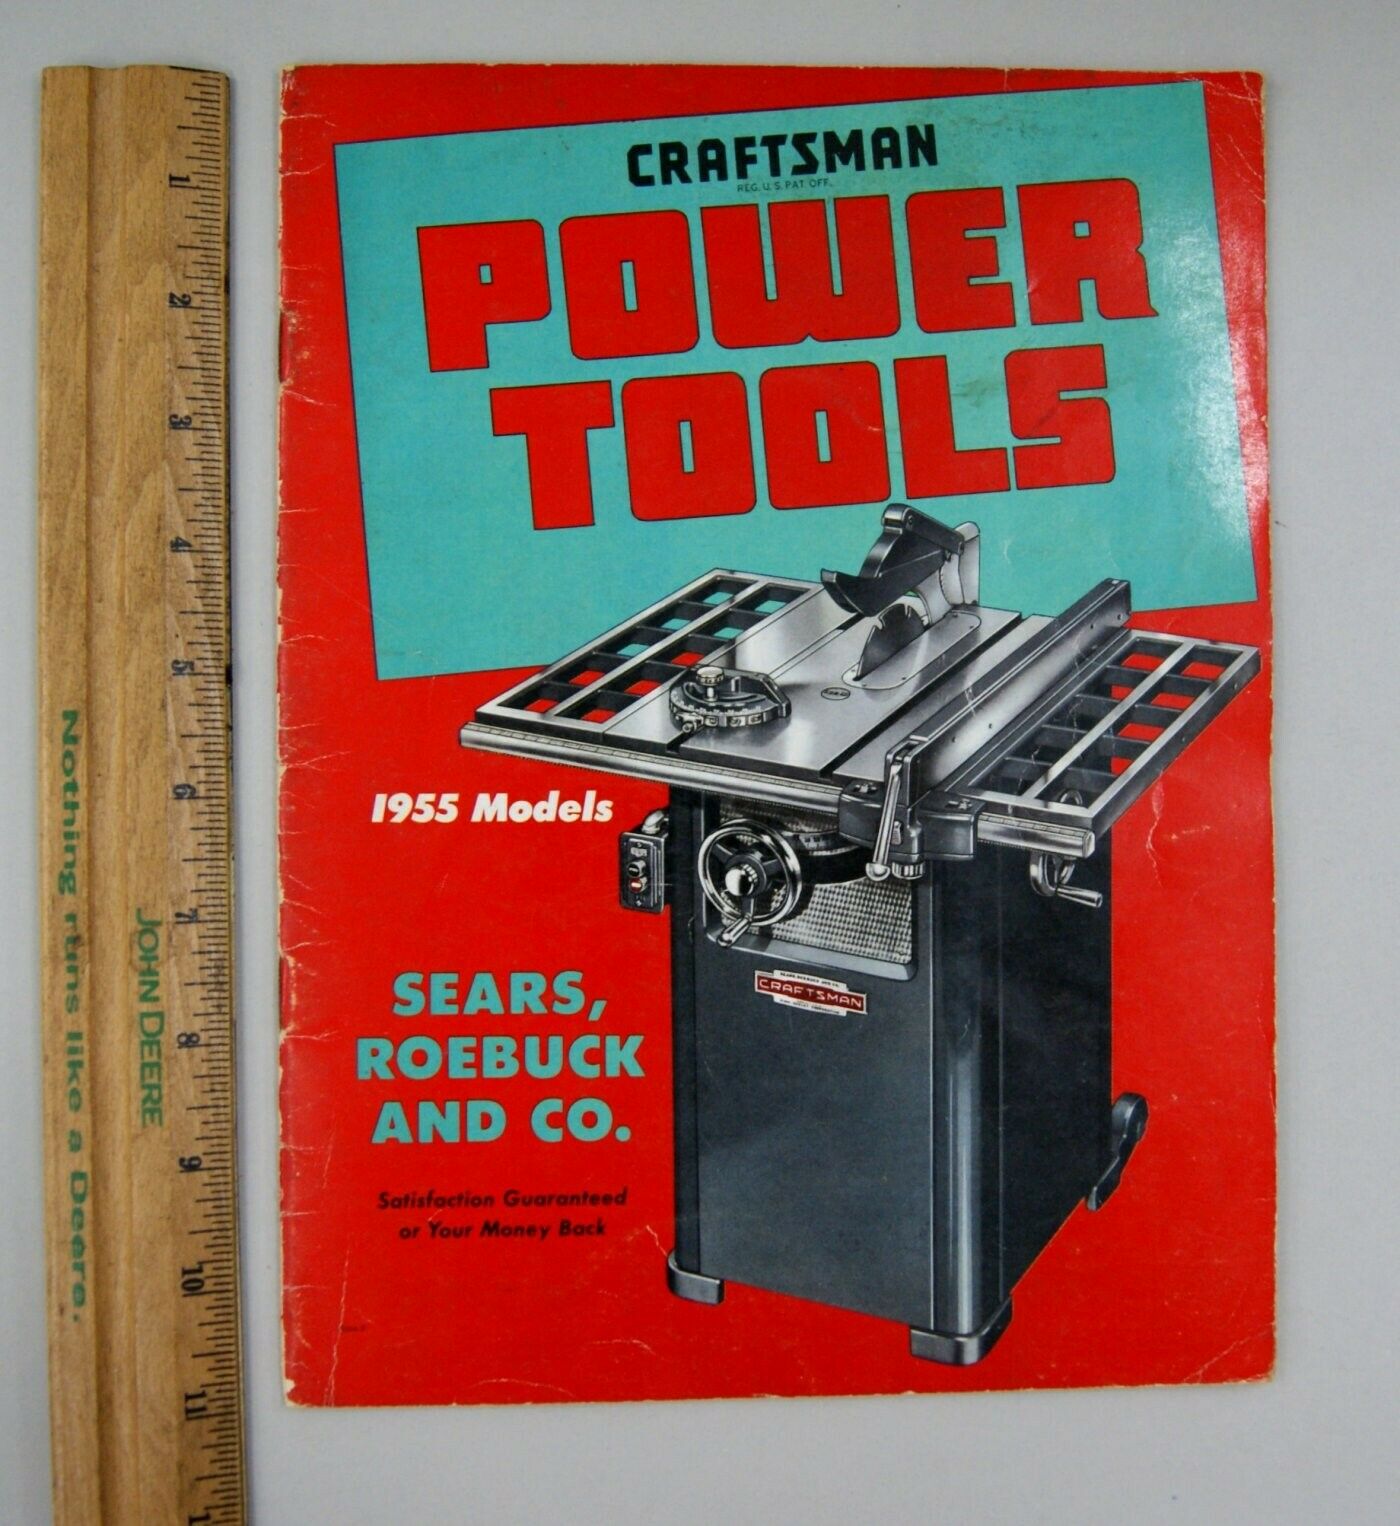 Original/vintage Sears Roebuck & Co. Craftsman Power Tools Catalog, 1955, L-3731